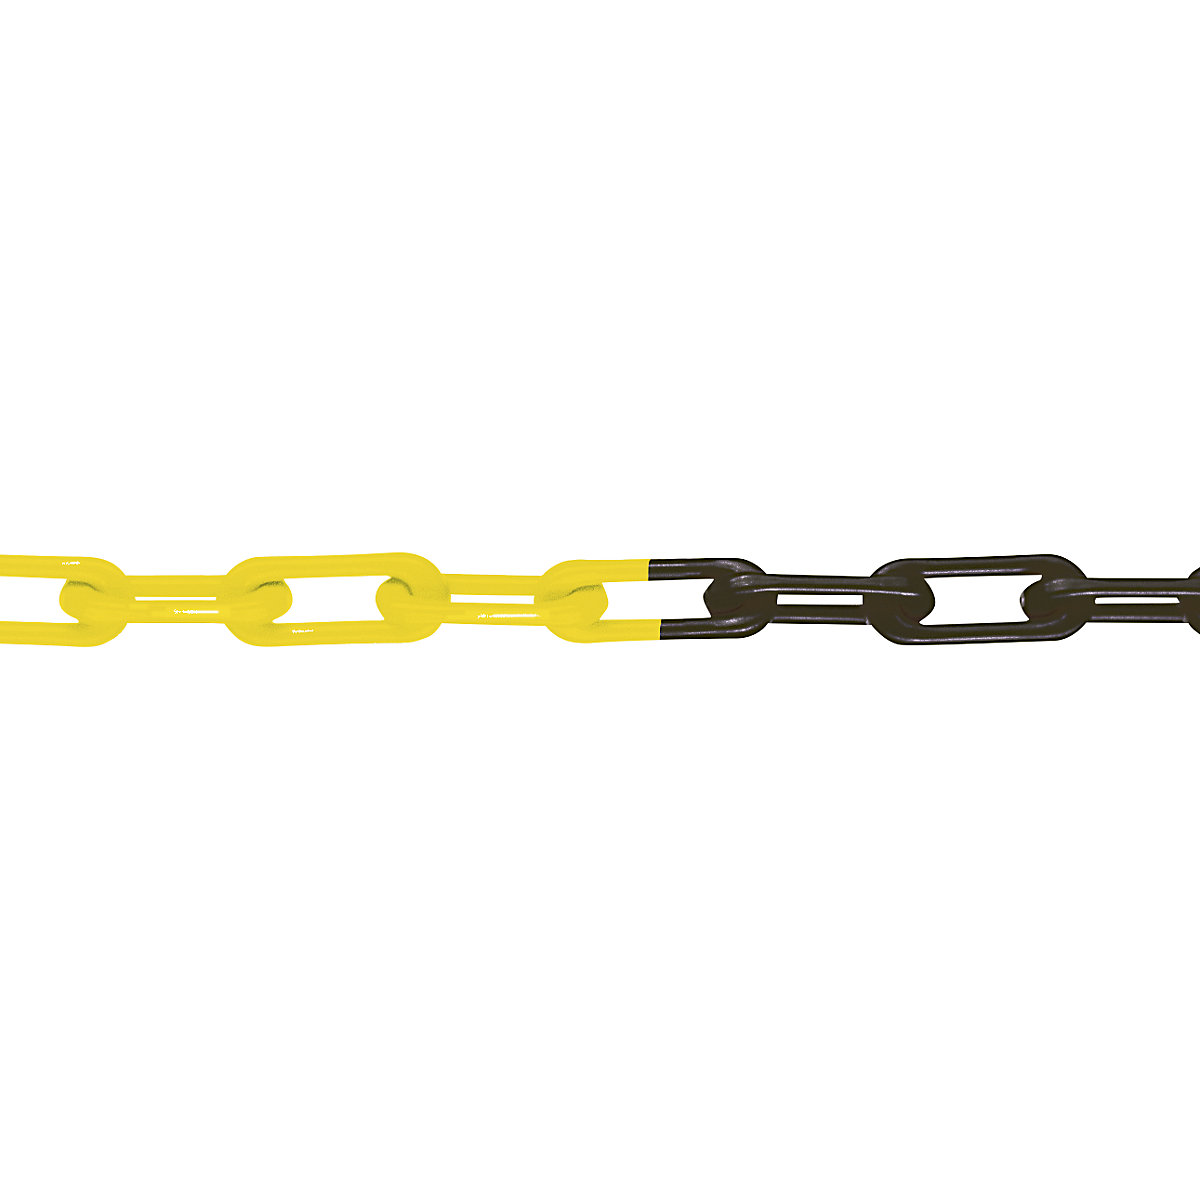 Nylon chain, MNK quality standard 6, band length 50 m, black/yellow, 4+ items-2